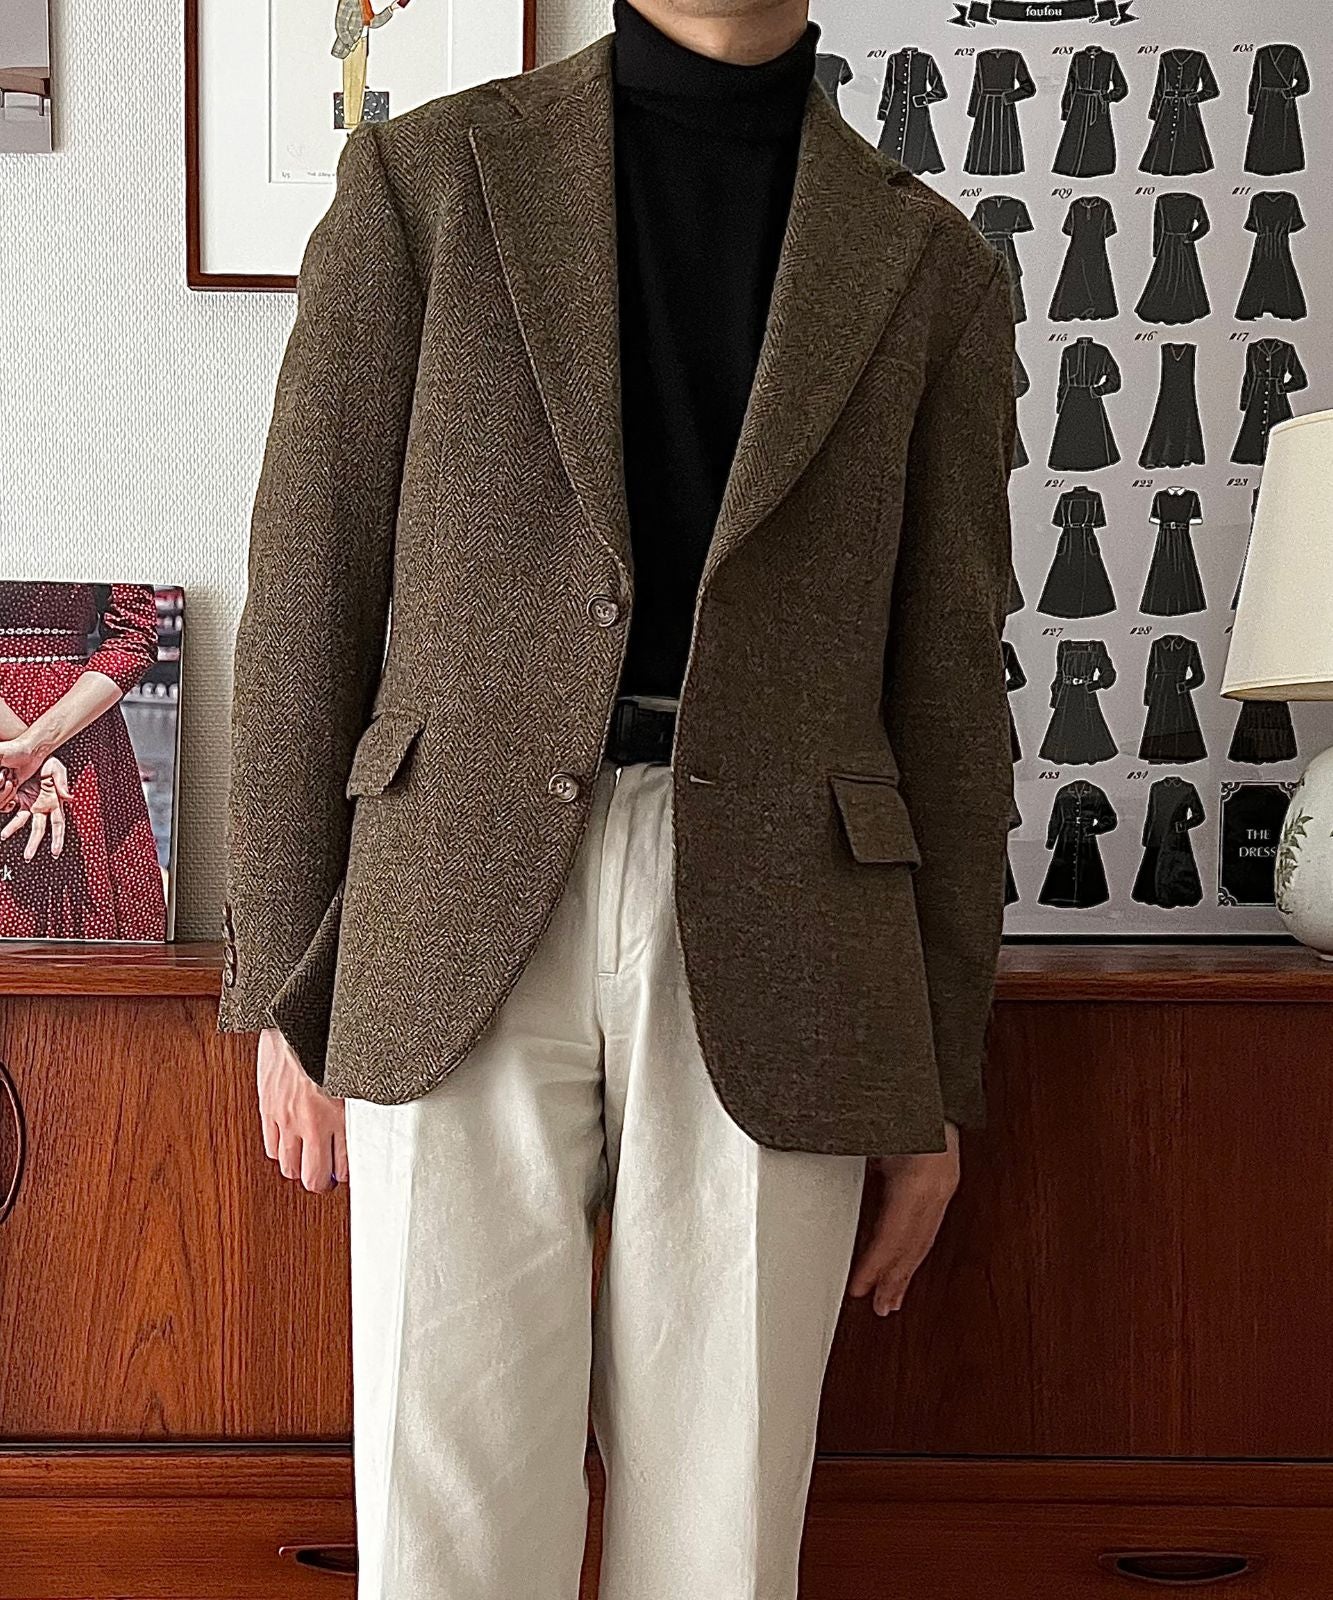 ≪予約販売≫【Men's】wool herringbone jacket 